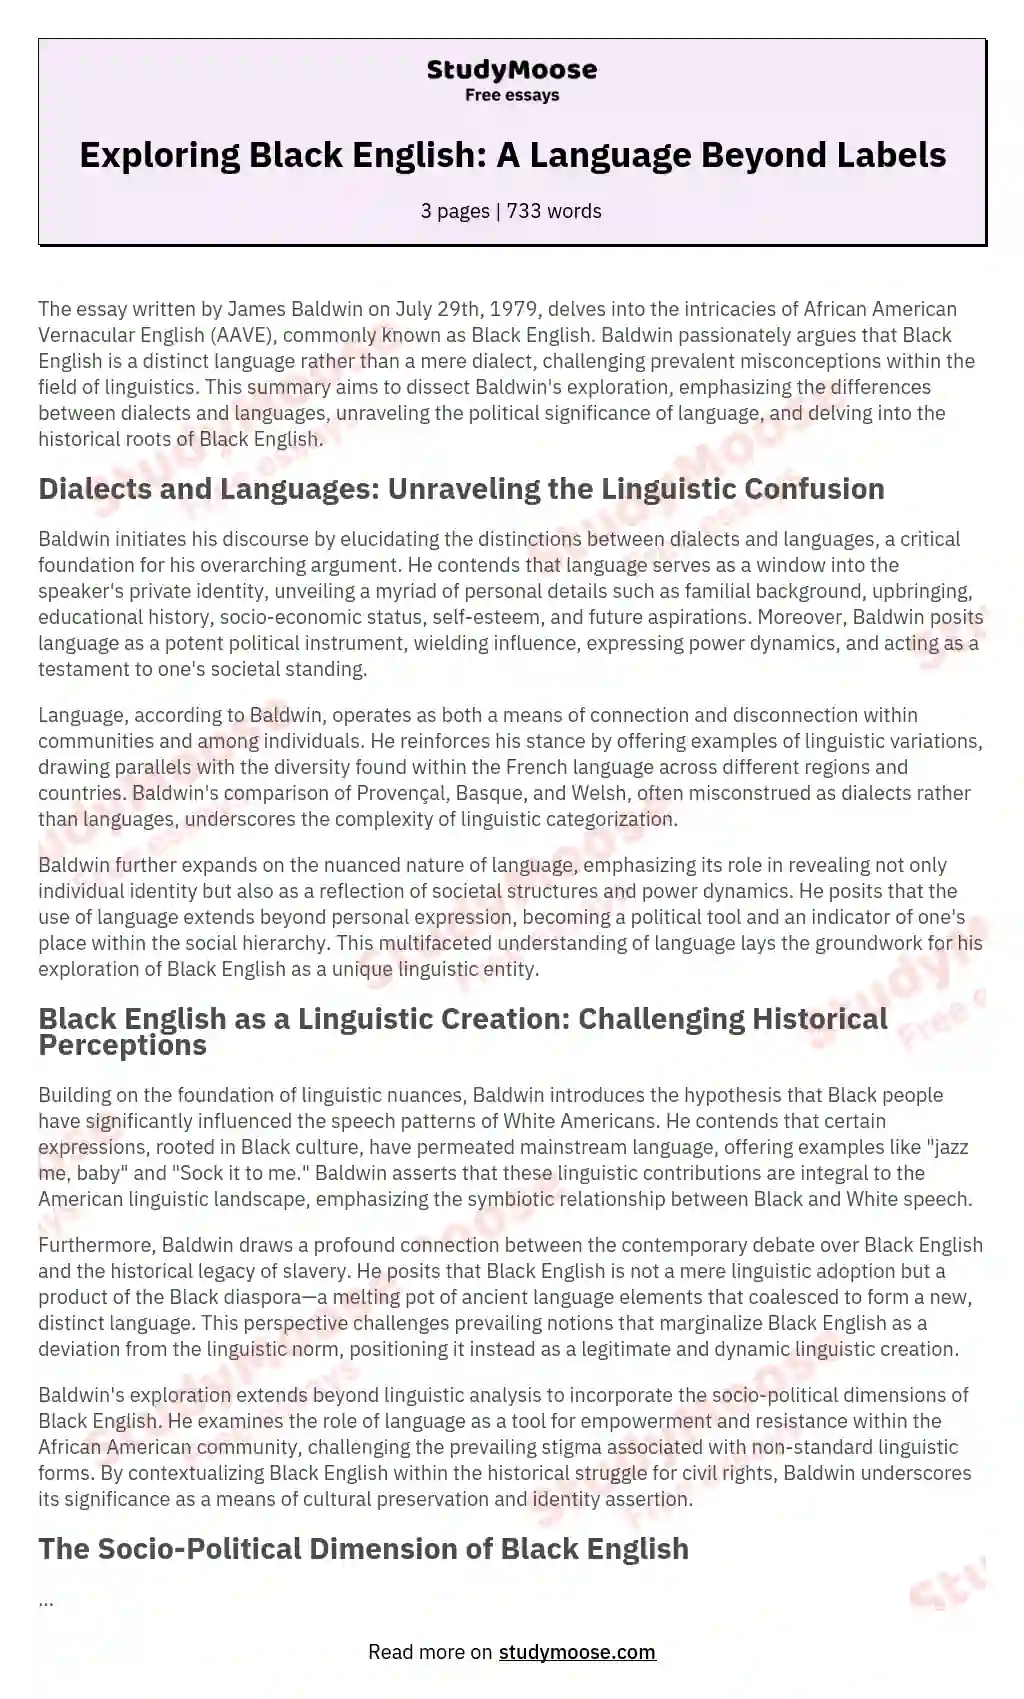 Exploring Black English: A Language Beyond Labels essay